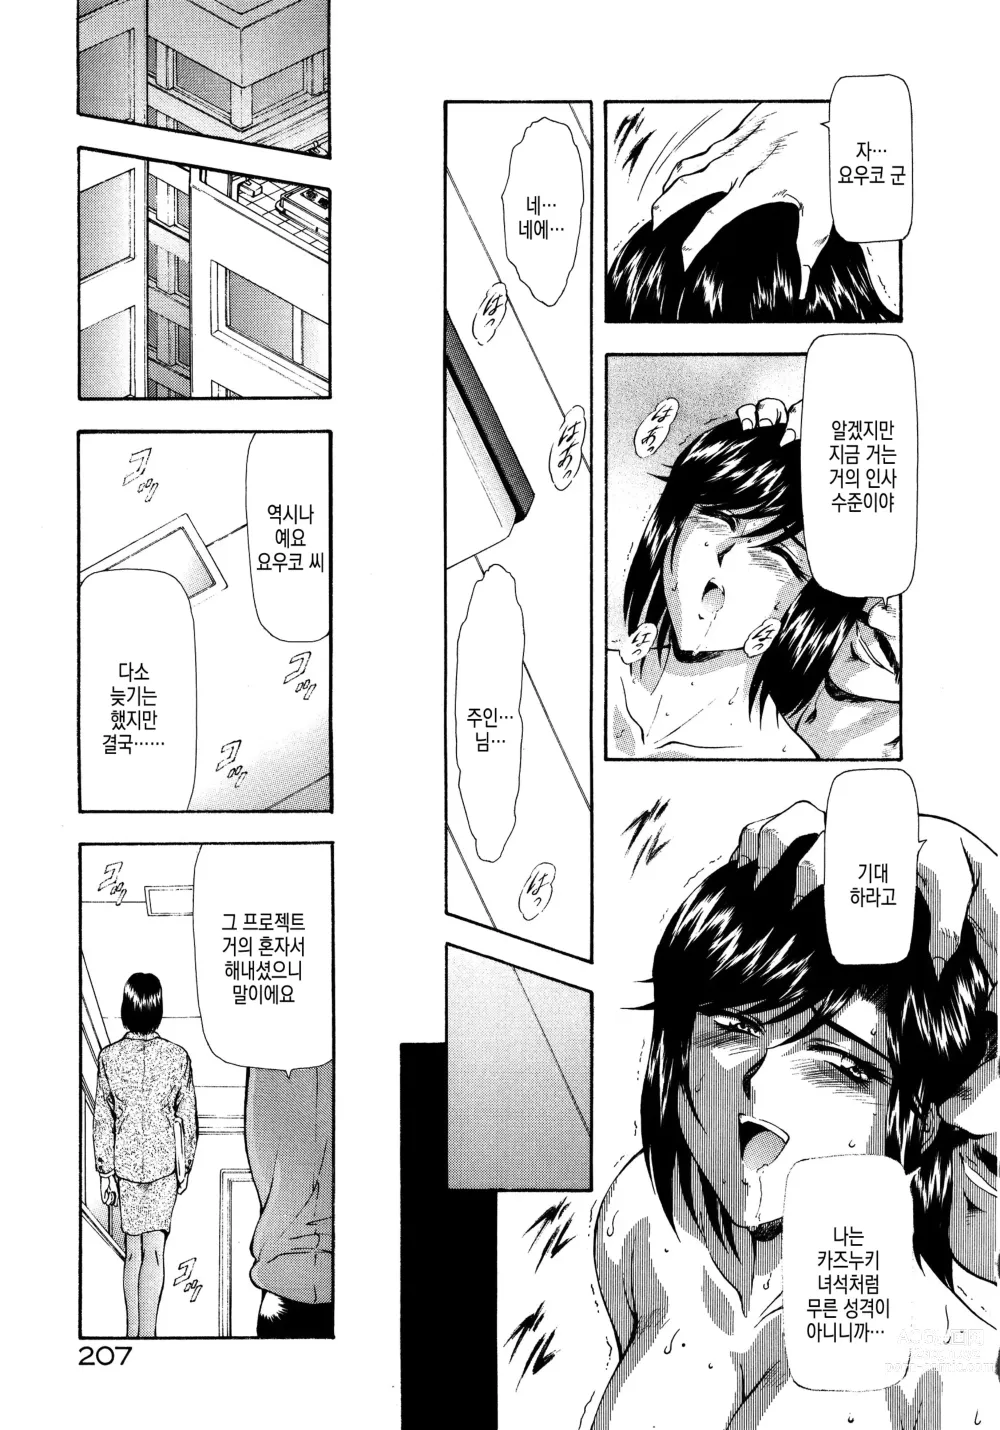 Page 145 of manga 진실의 보완 ch.4 ~ ch.10